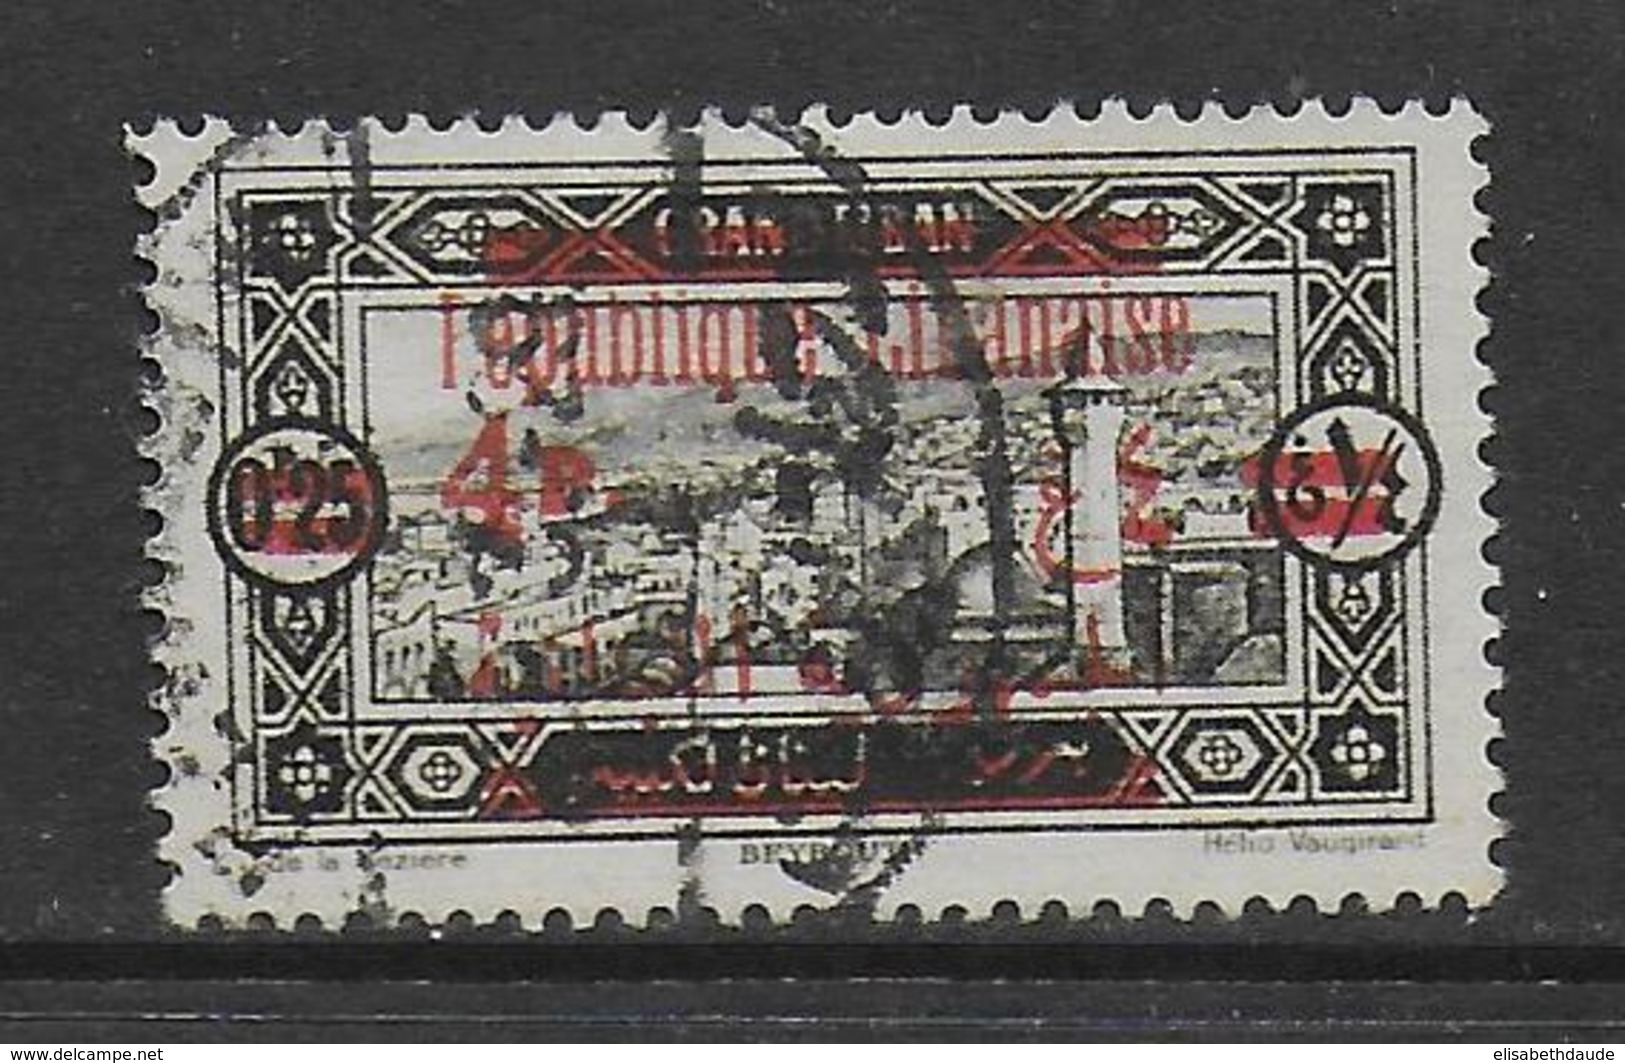 GRAND-LIBAN - 1928 - YVERT N°119 SURCHARGE RECTO-VERSO OBLITERE - COTE = 80 EUR. - Usados